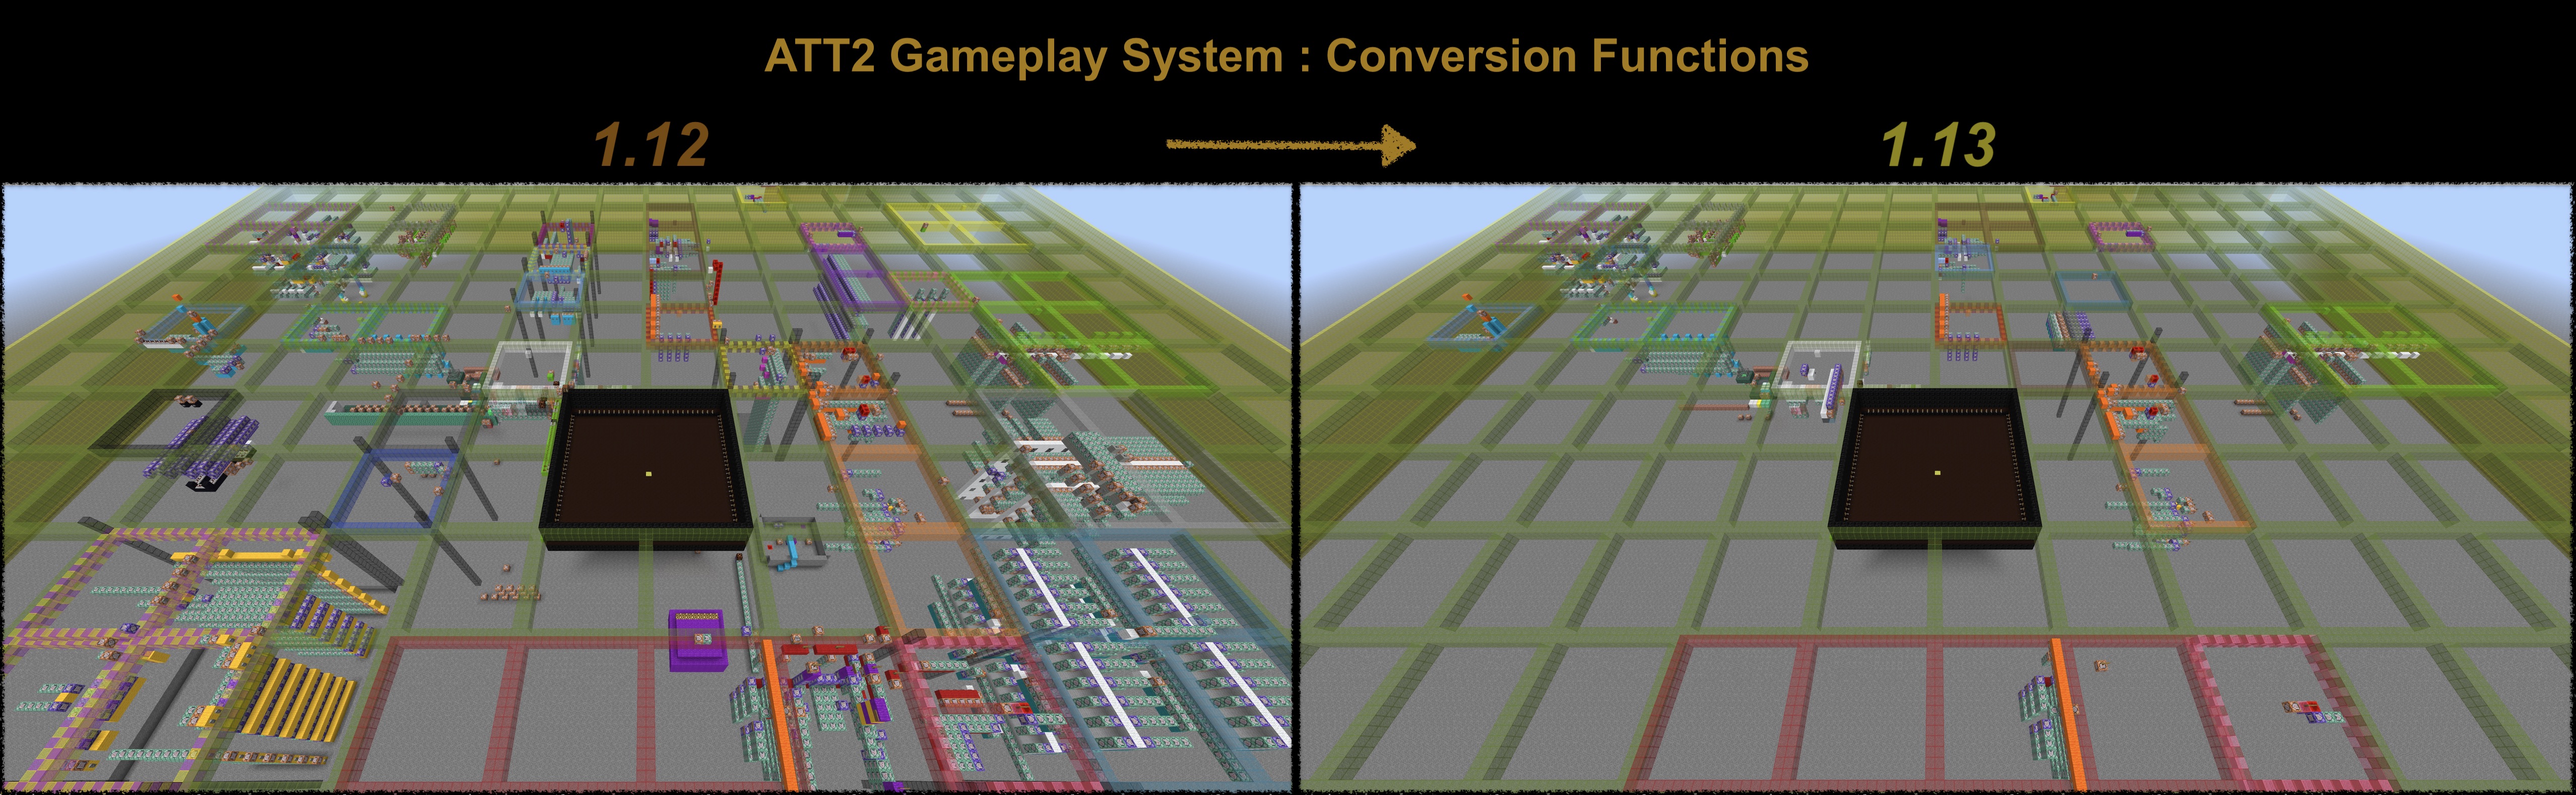 gameplay-conversion-functions.jpg